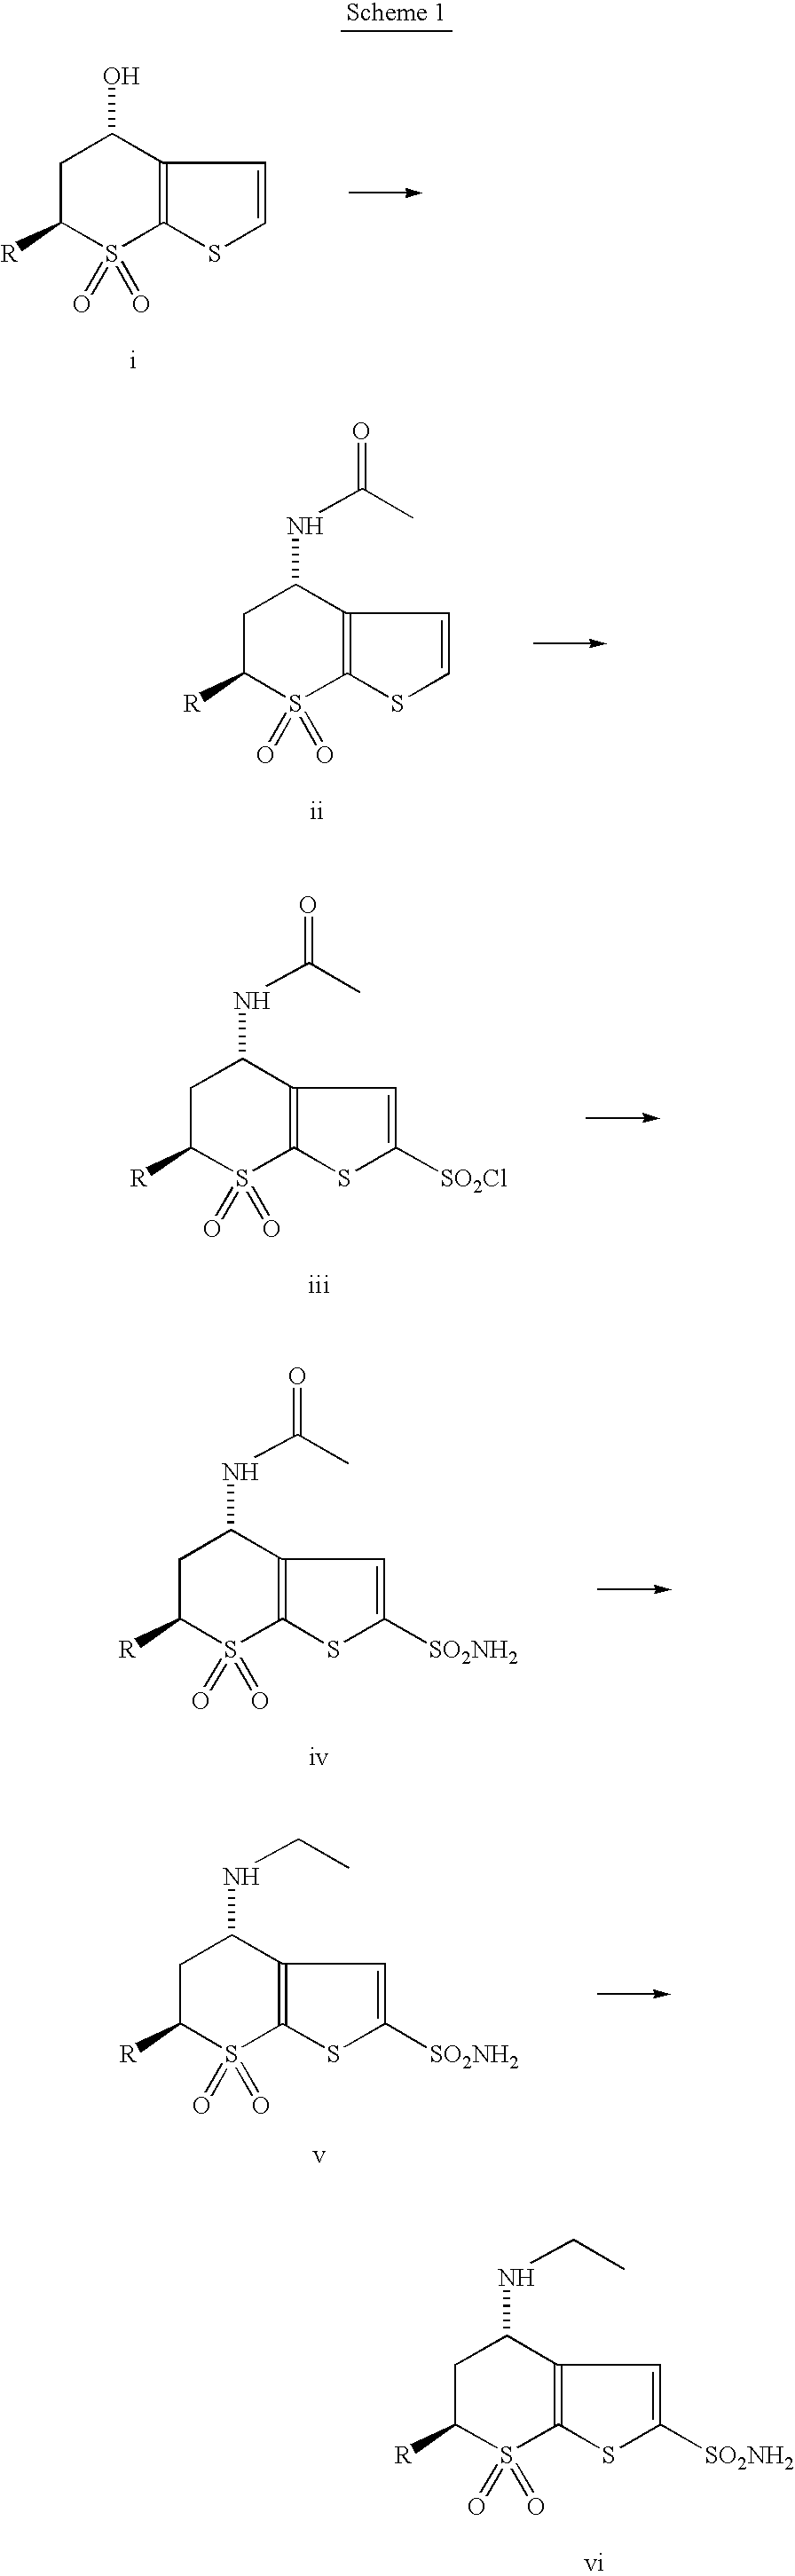 Process for preparing 5,6-dihydro-4-(S)-(ethylamino)-6-(S) methyl-4H-thieno[2,3b]thiopyran-2-sulphonamide-7,7-dioxide HCI